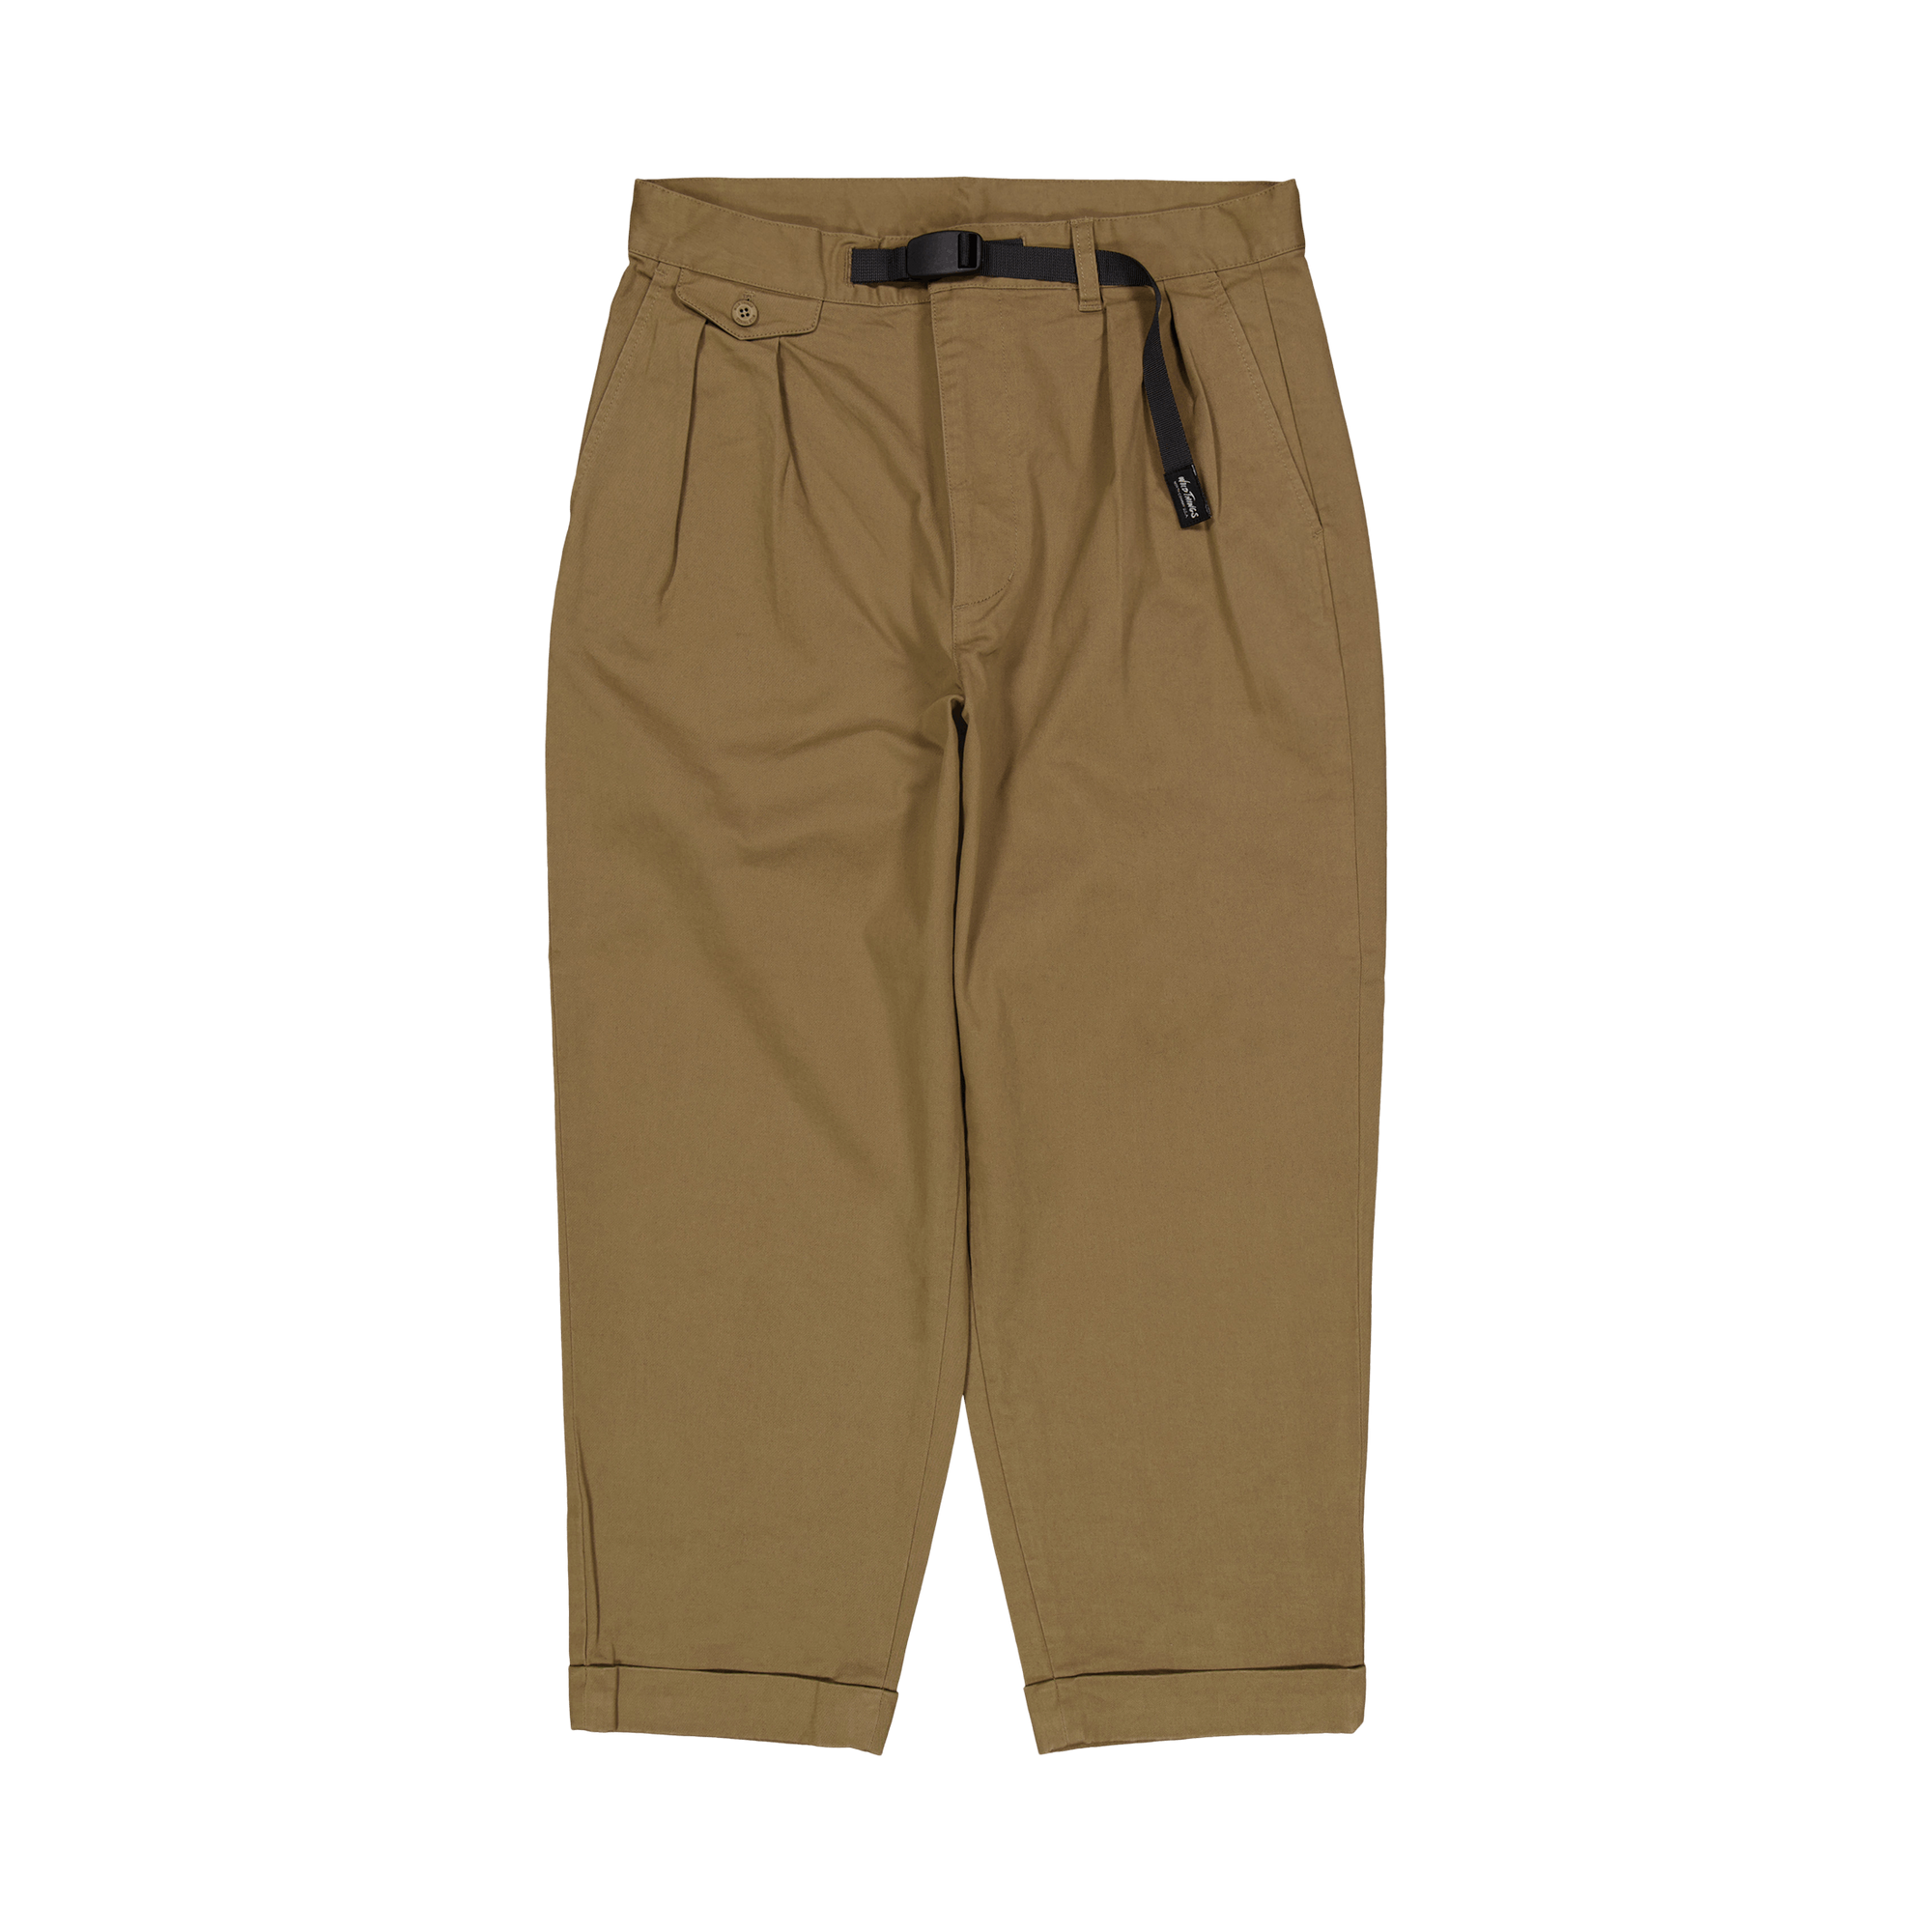 Khaki Cargo Pants Outfits (284 ideas & outfits)